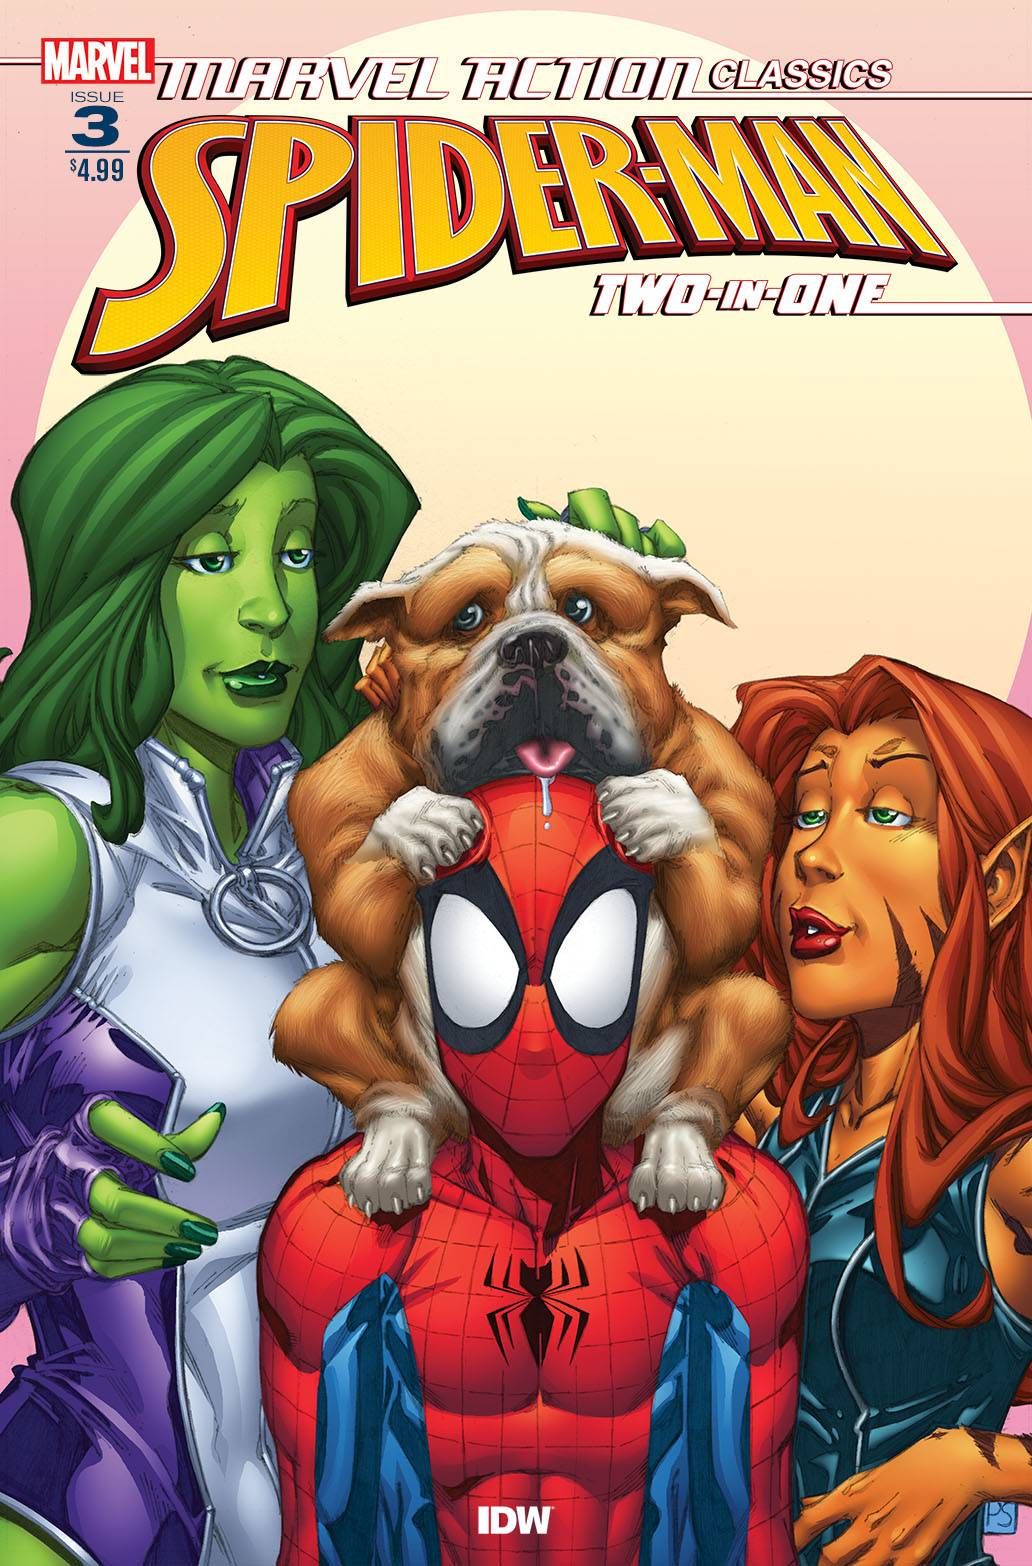 Marvel Action Classics Spider-man #3 Comic